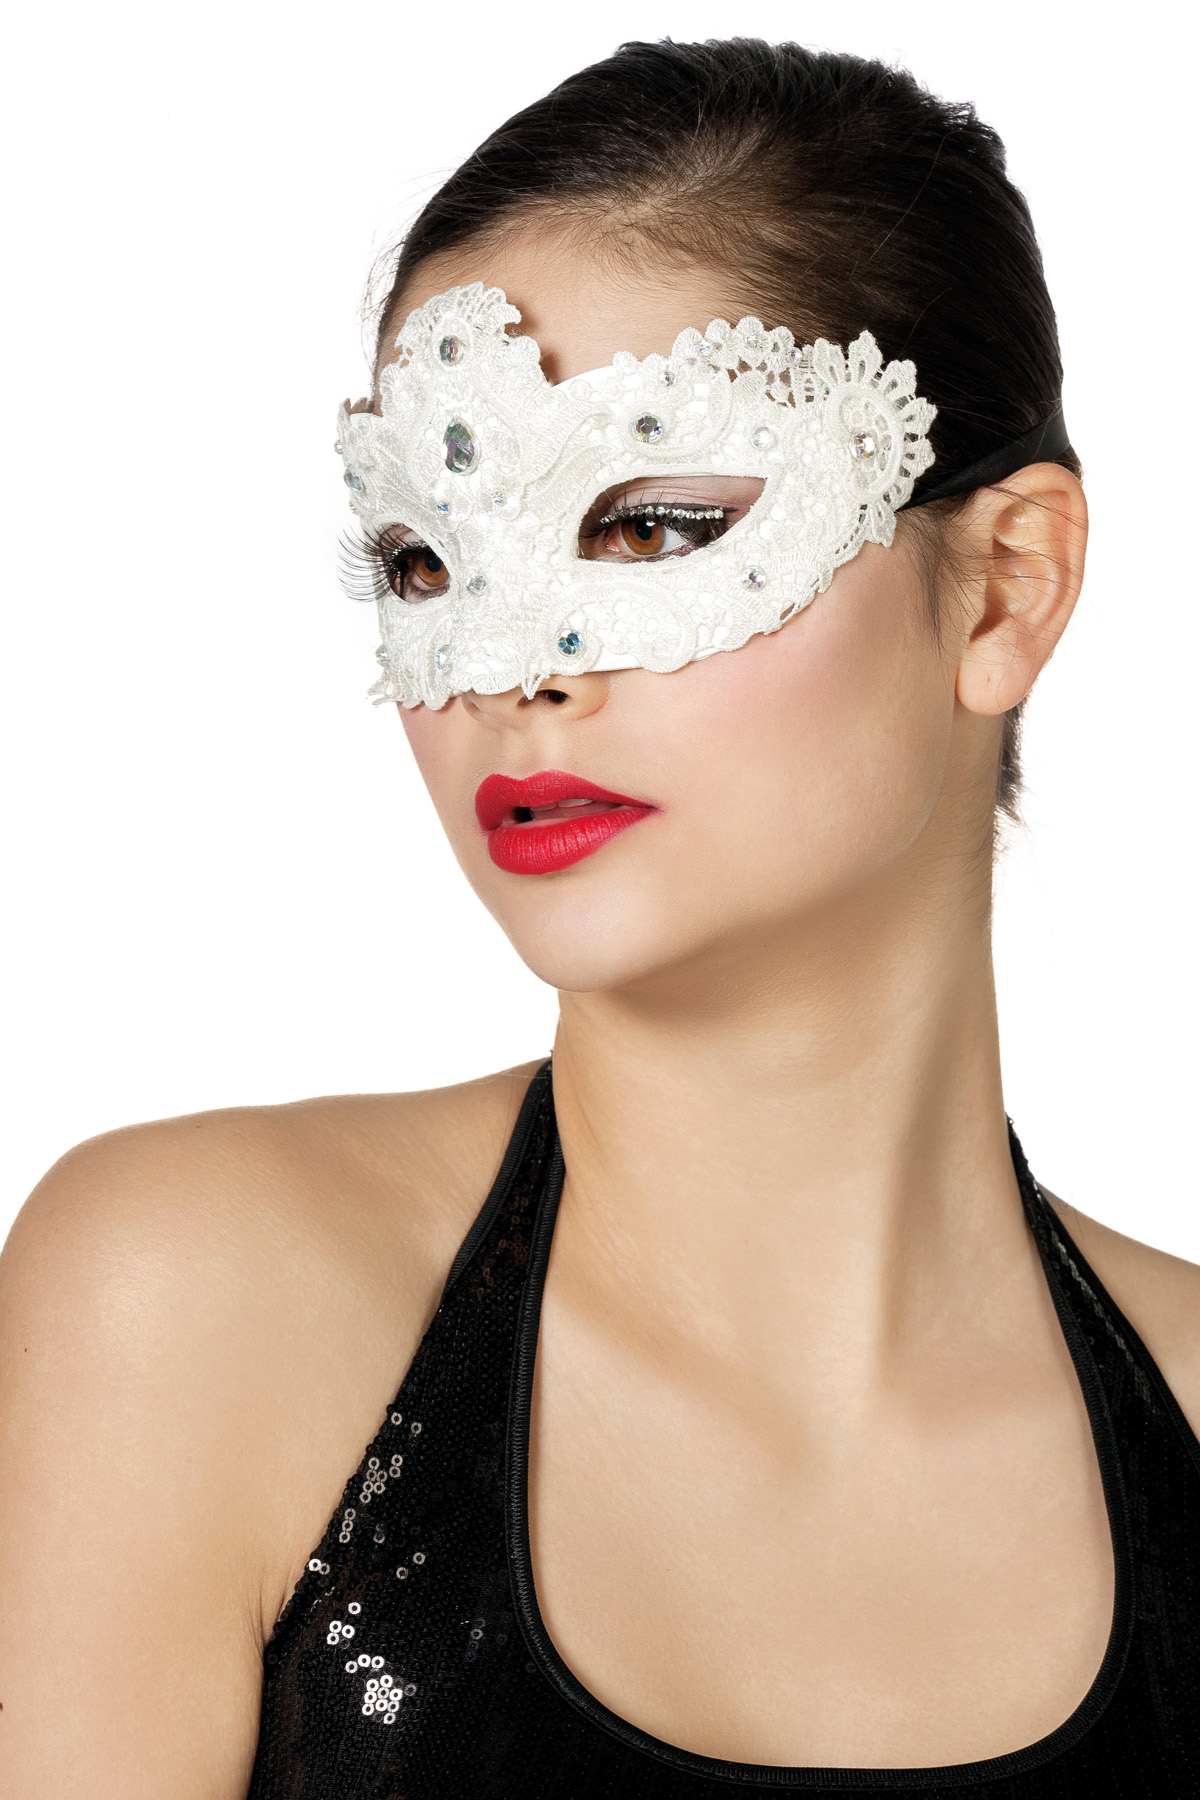 Venetiaans masker wit met steentje - Willaert, verkleedkledij, carnavalkledij, carnavaloutfit, feestkledij, masker, bal masqu, mysterieus, nieuwjaar, gemaskerd bal, Venetiaans masker